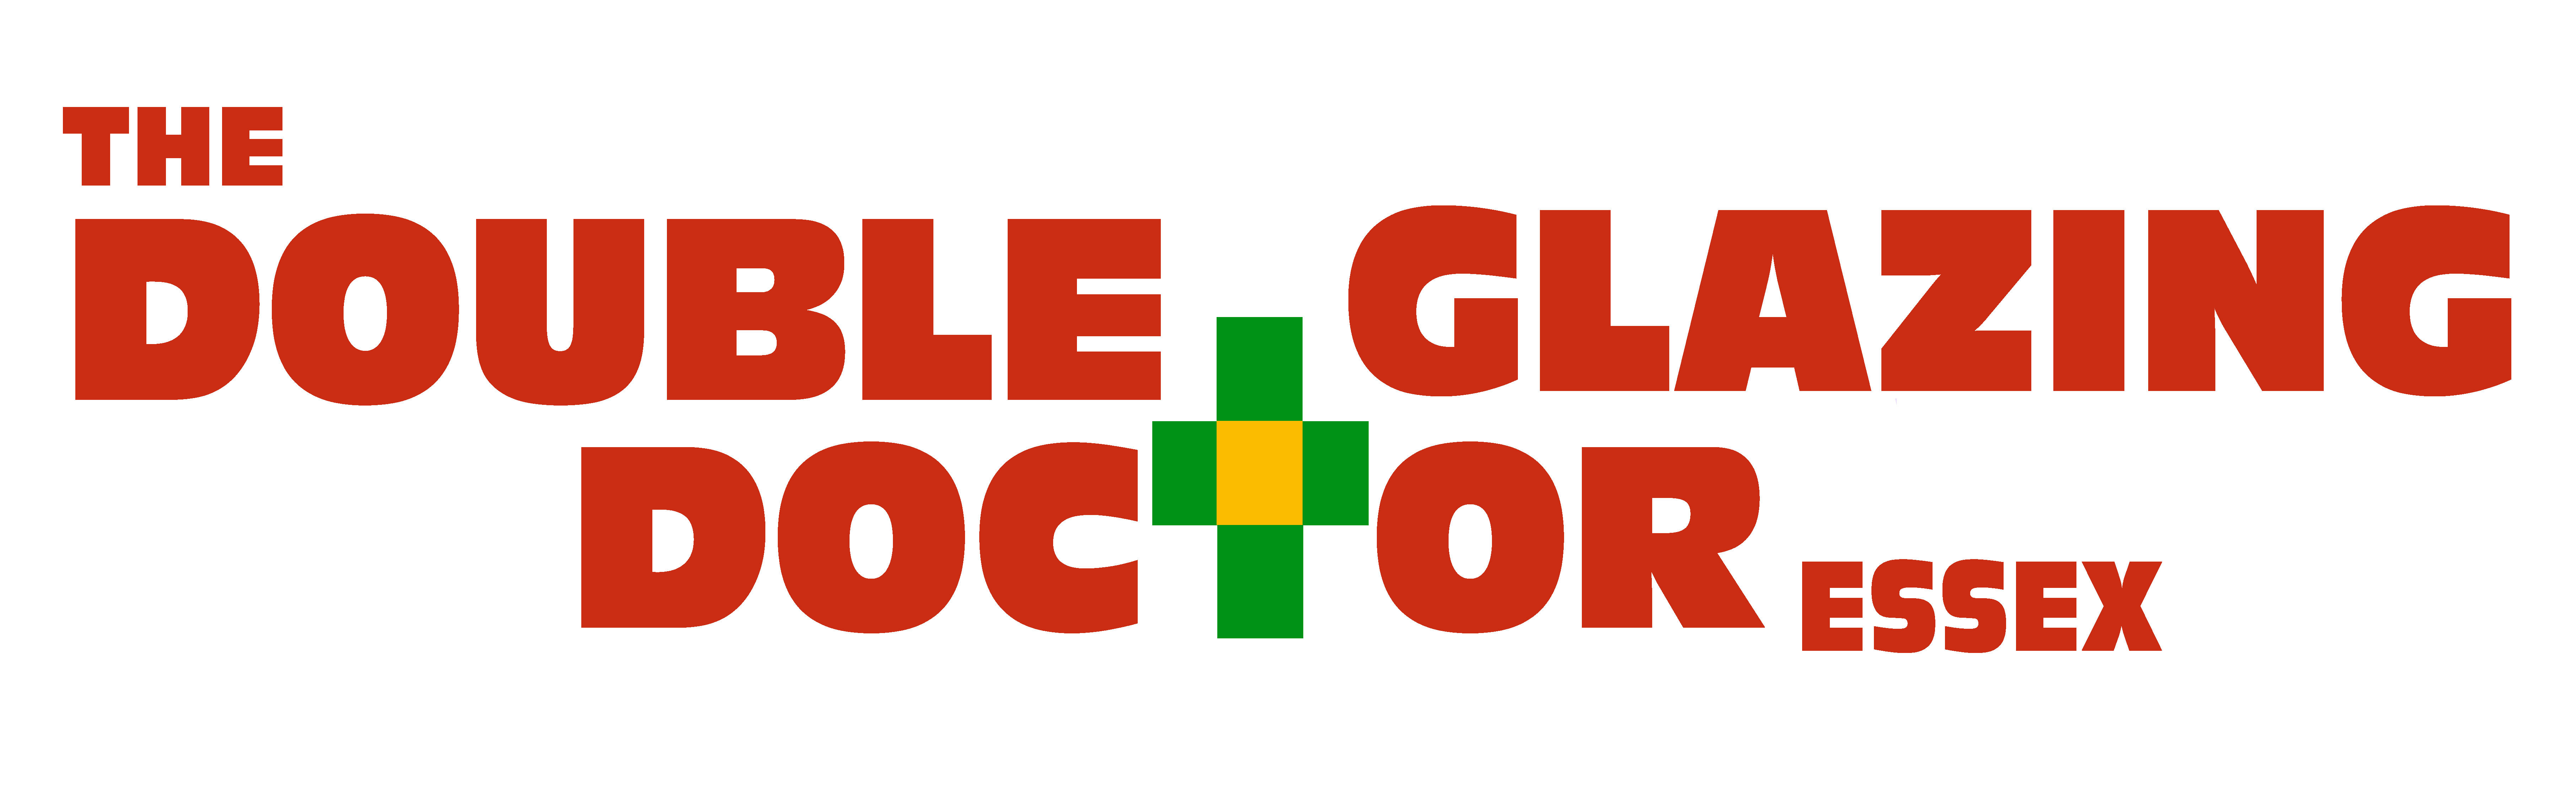 Double Glazing Doctor Essex